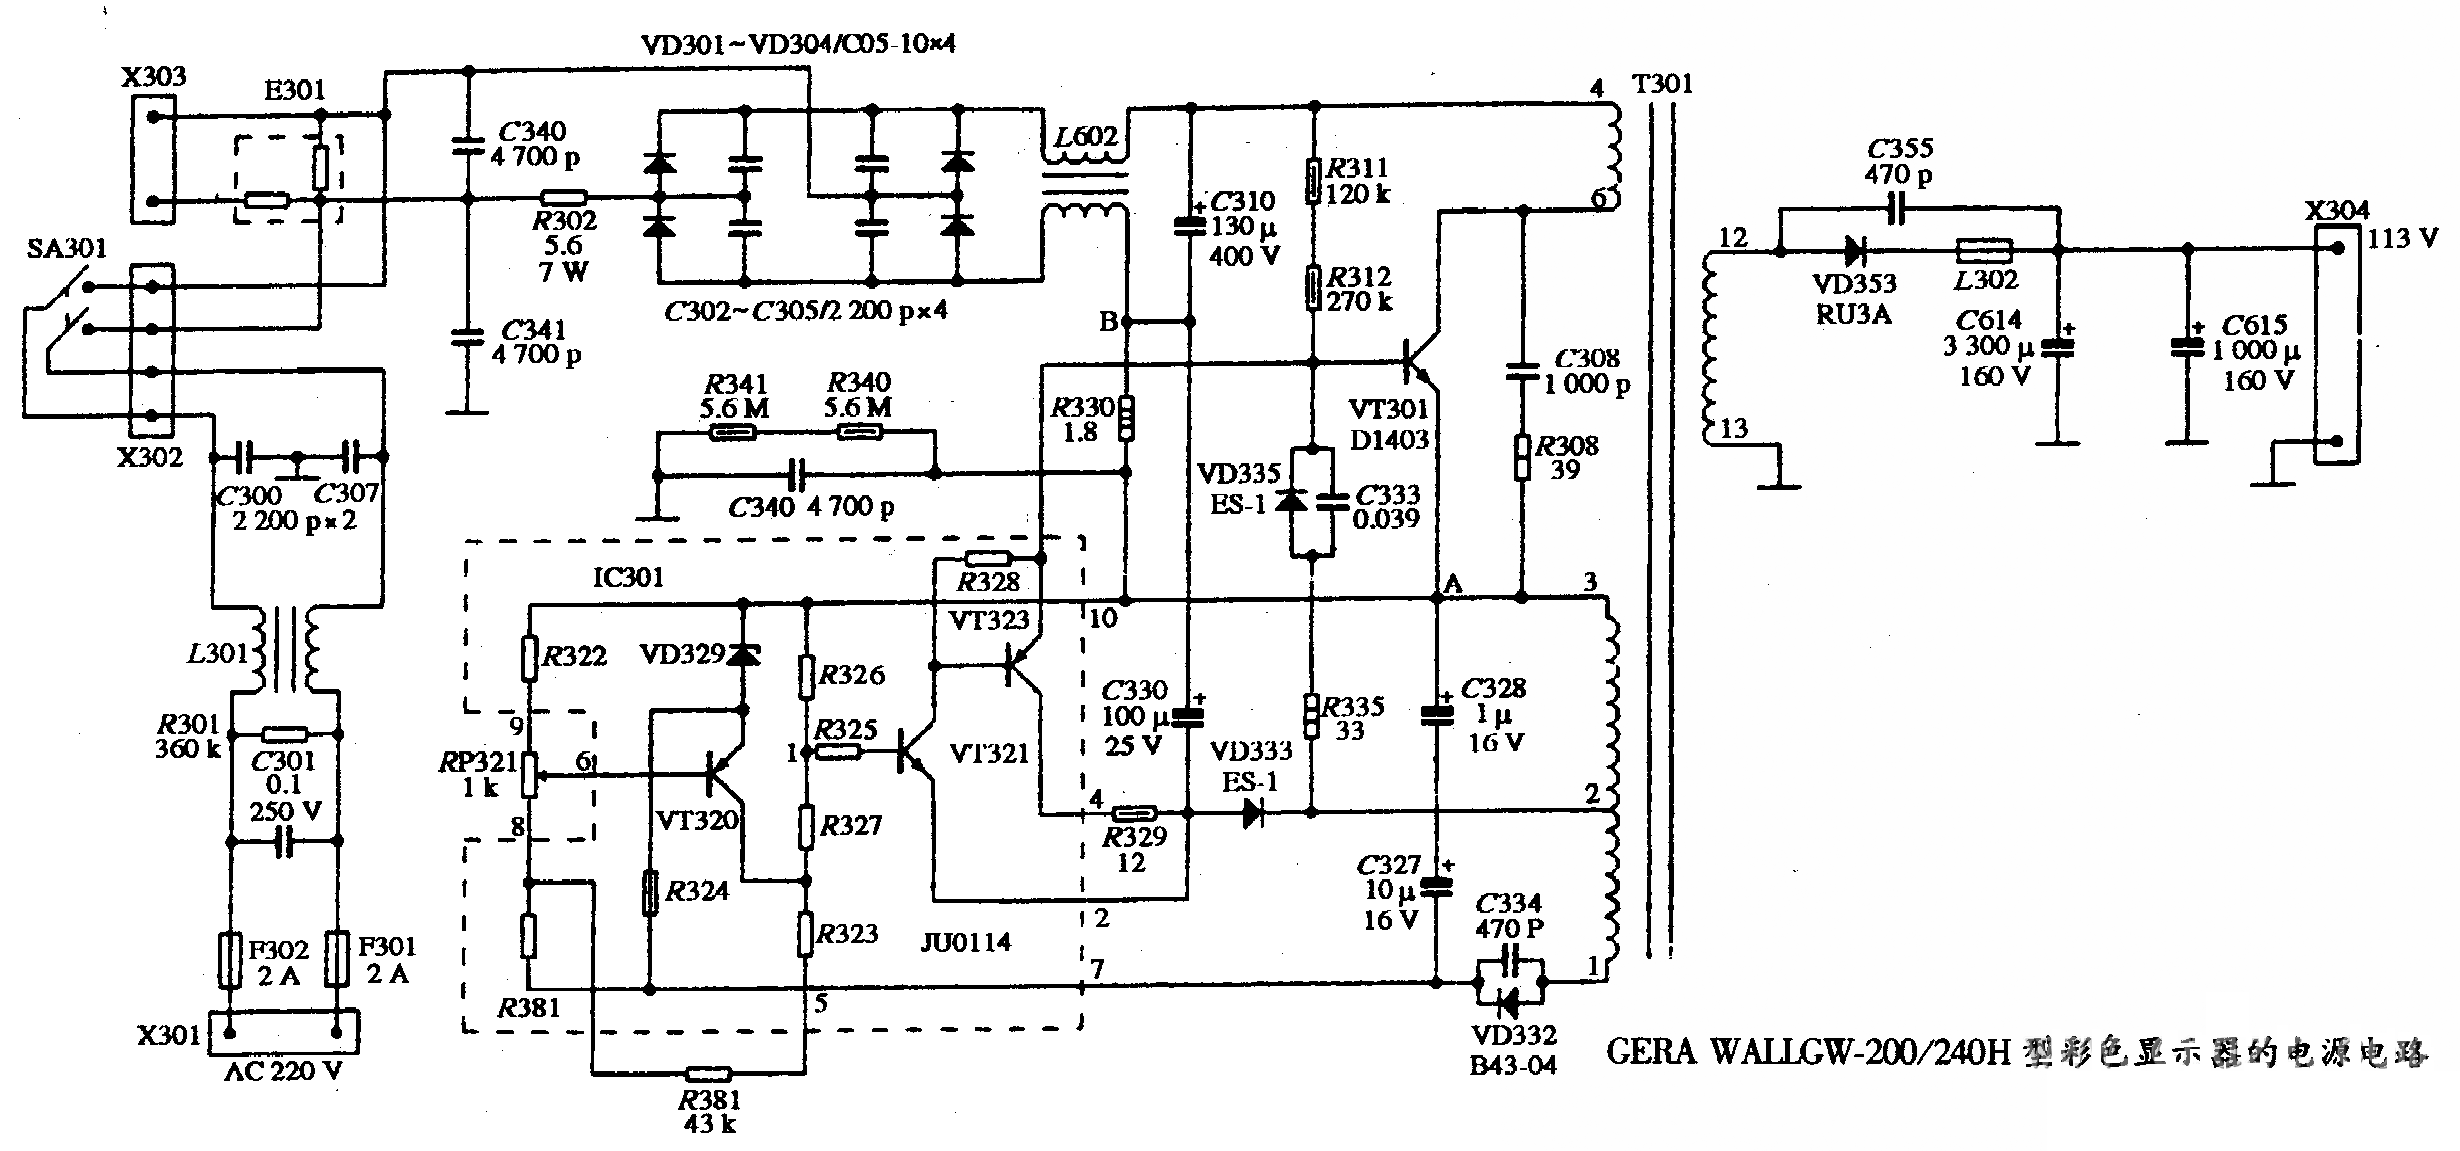 GERAT WALL GW-200/200H型彩色显示器的电源电路图